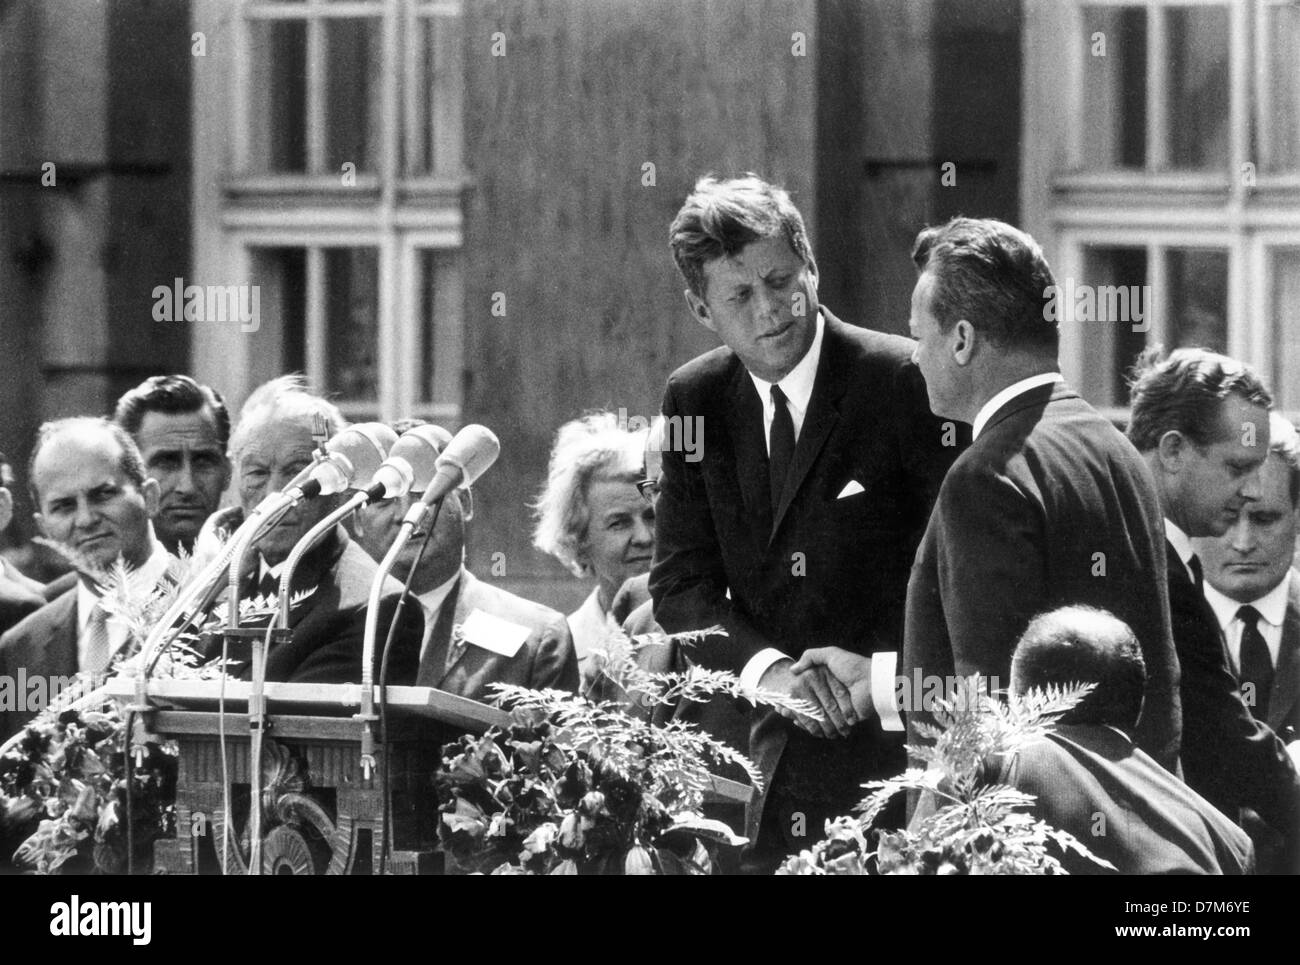 American President John F. Kennedy (m) and the Berlin mayor Willy Brandt  (r) in front of Schöneberg city hall in Berlin on 26 June 1963. With his  legendary German spoken sentence "Ich